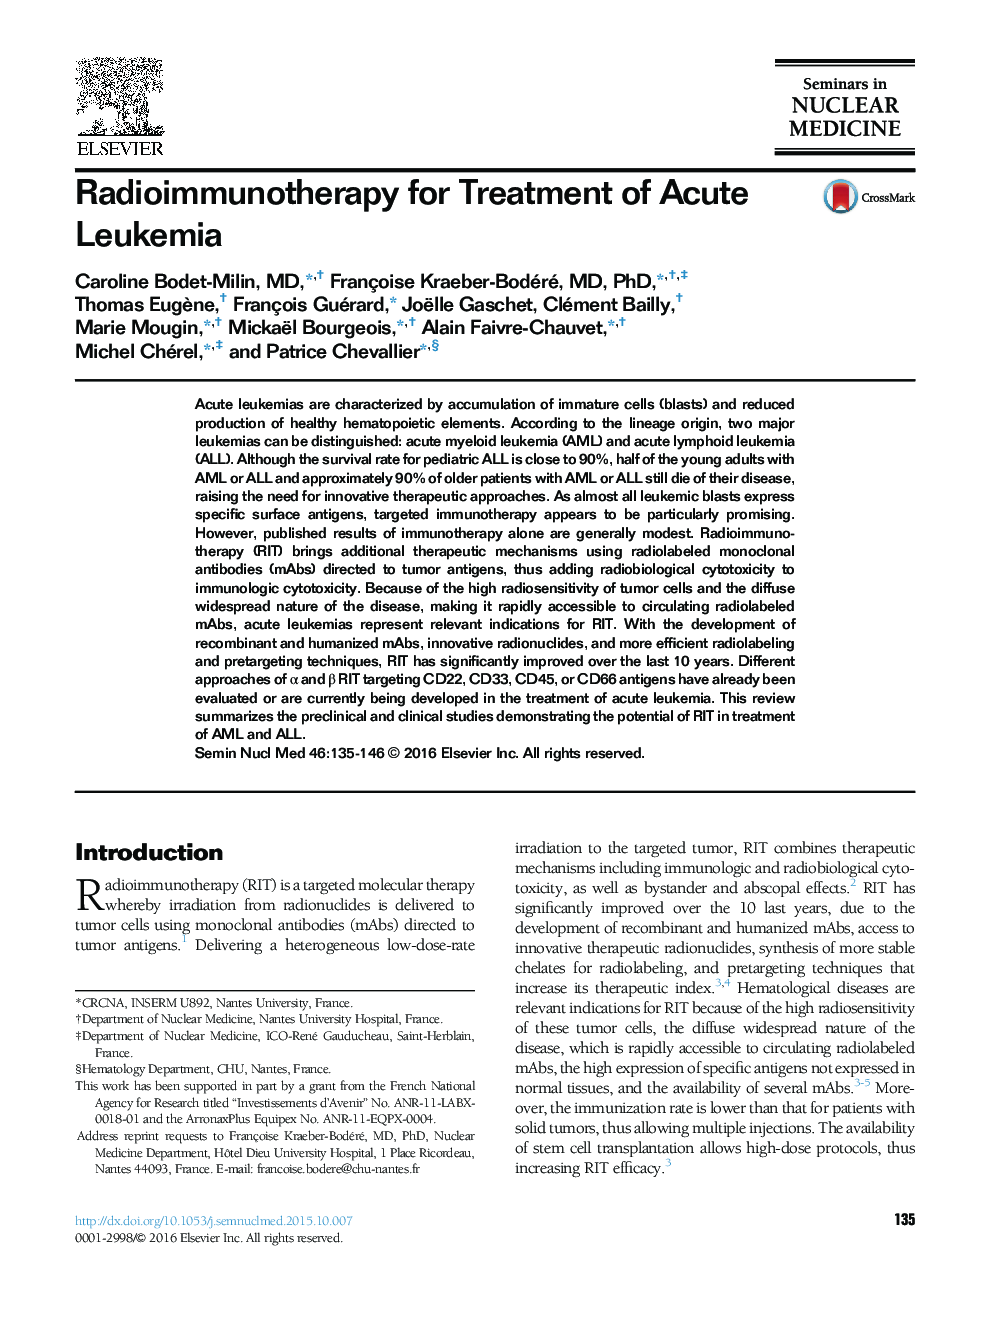 Radioimmunotherapy for Treatment of Acute Leukemia 